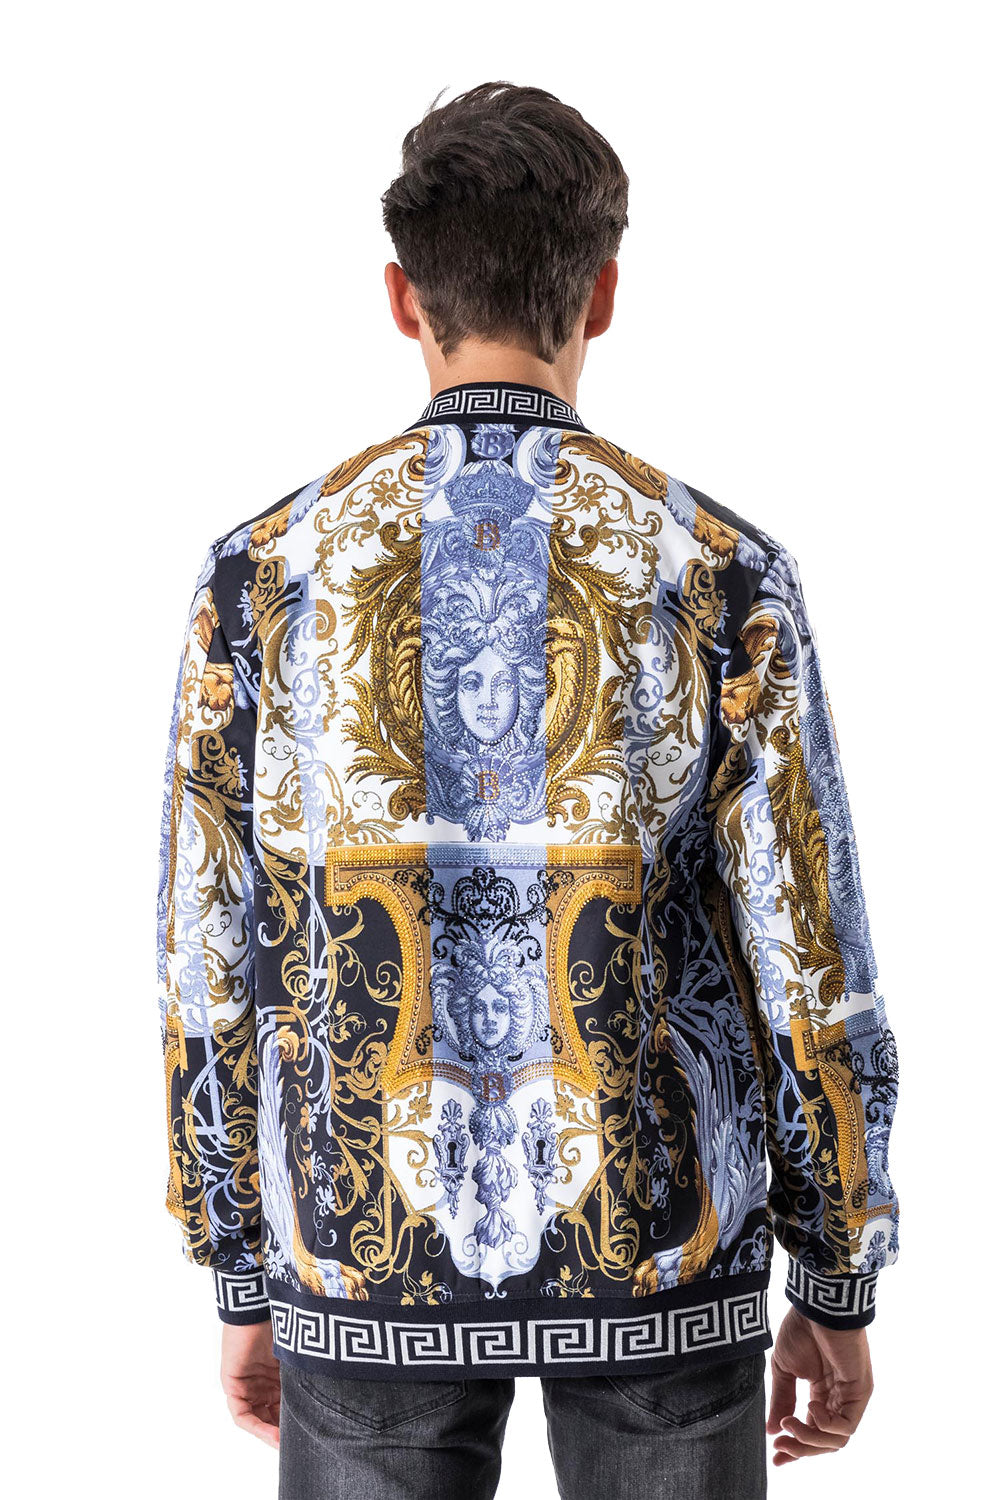 BARABAS Men's Rhinestone Medusa Greek Pattern Floral Jacket BP655 Royal Blue